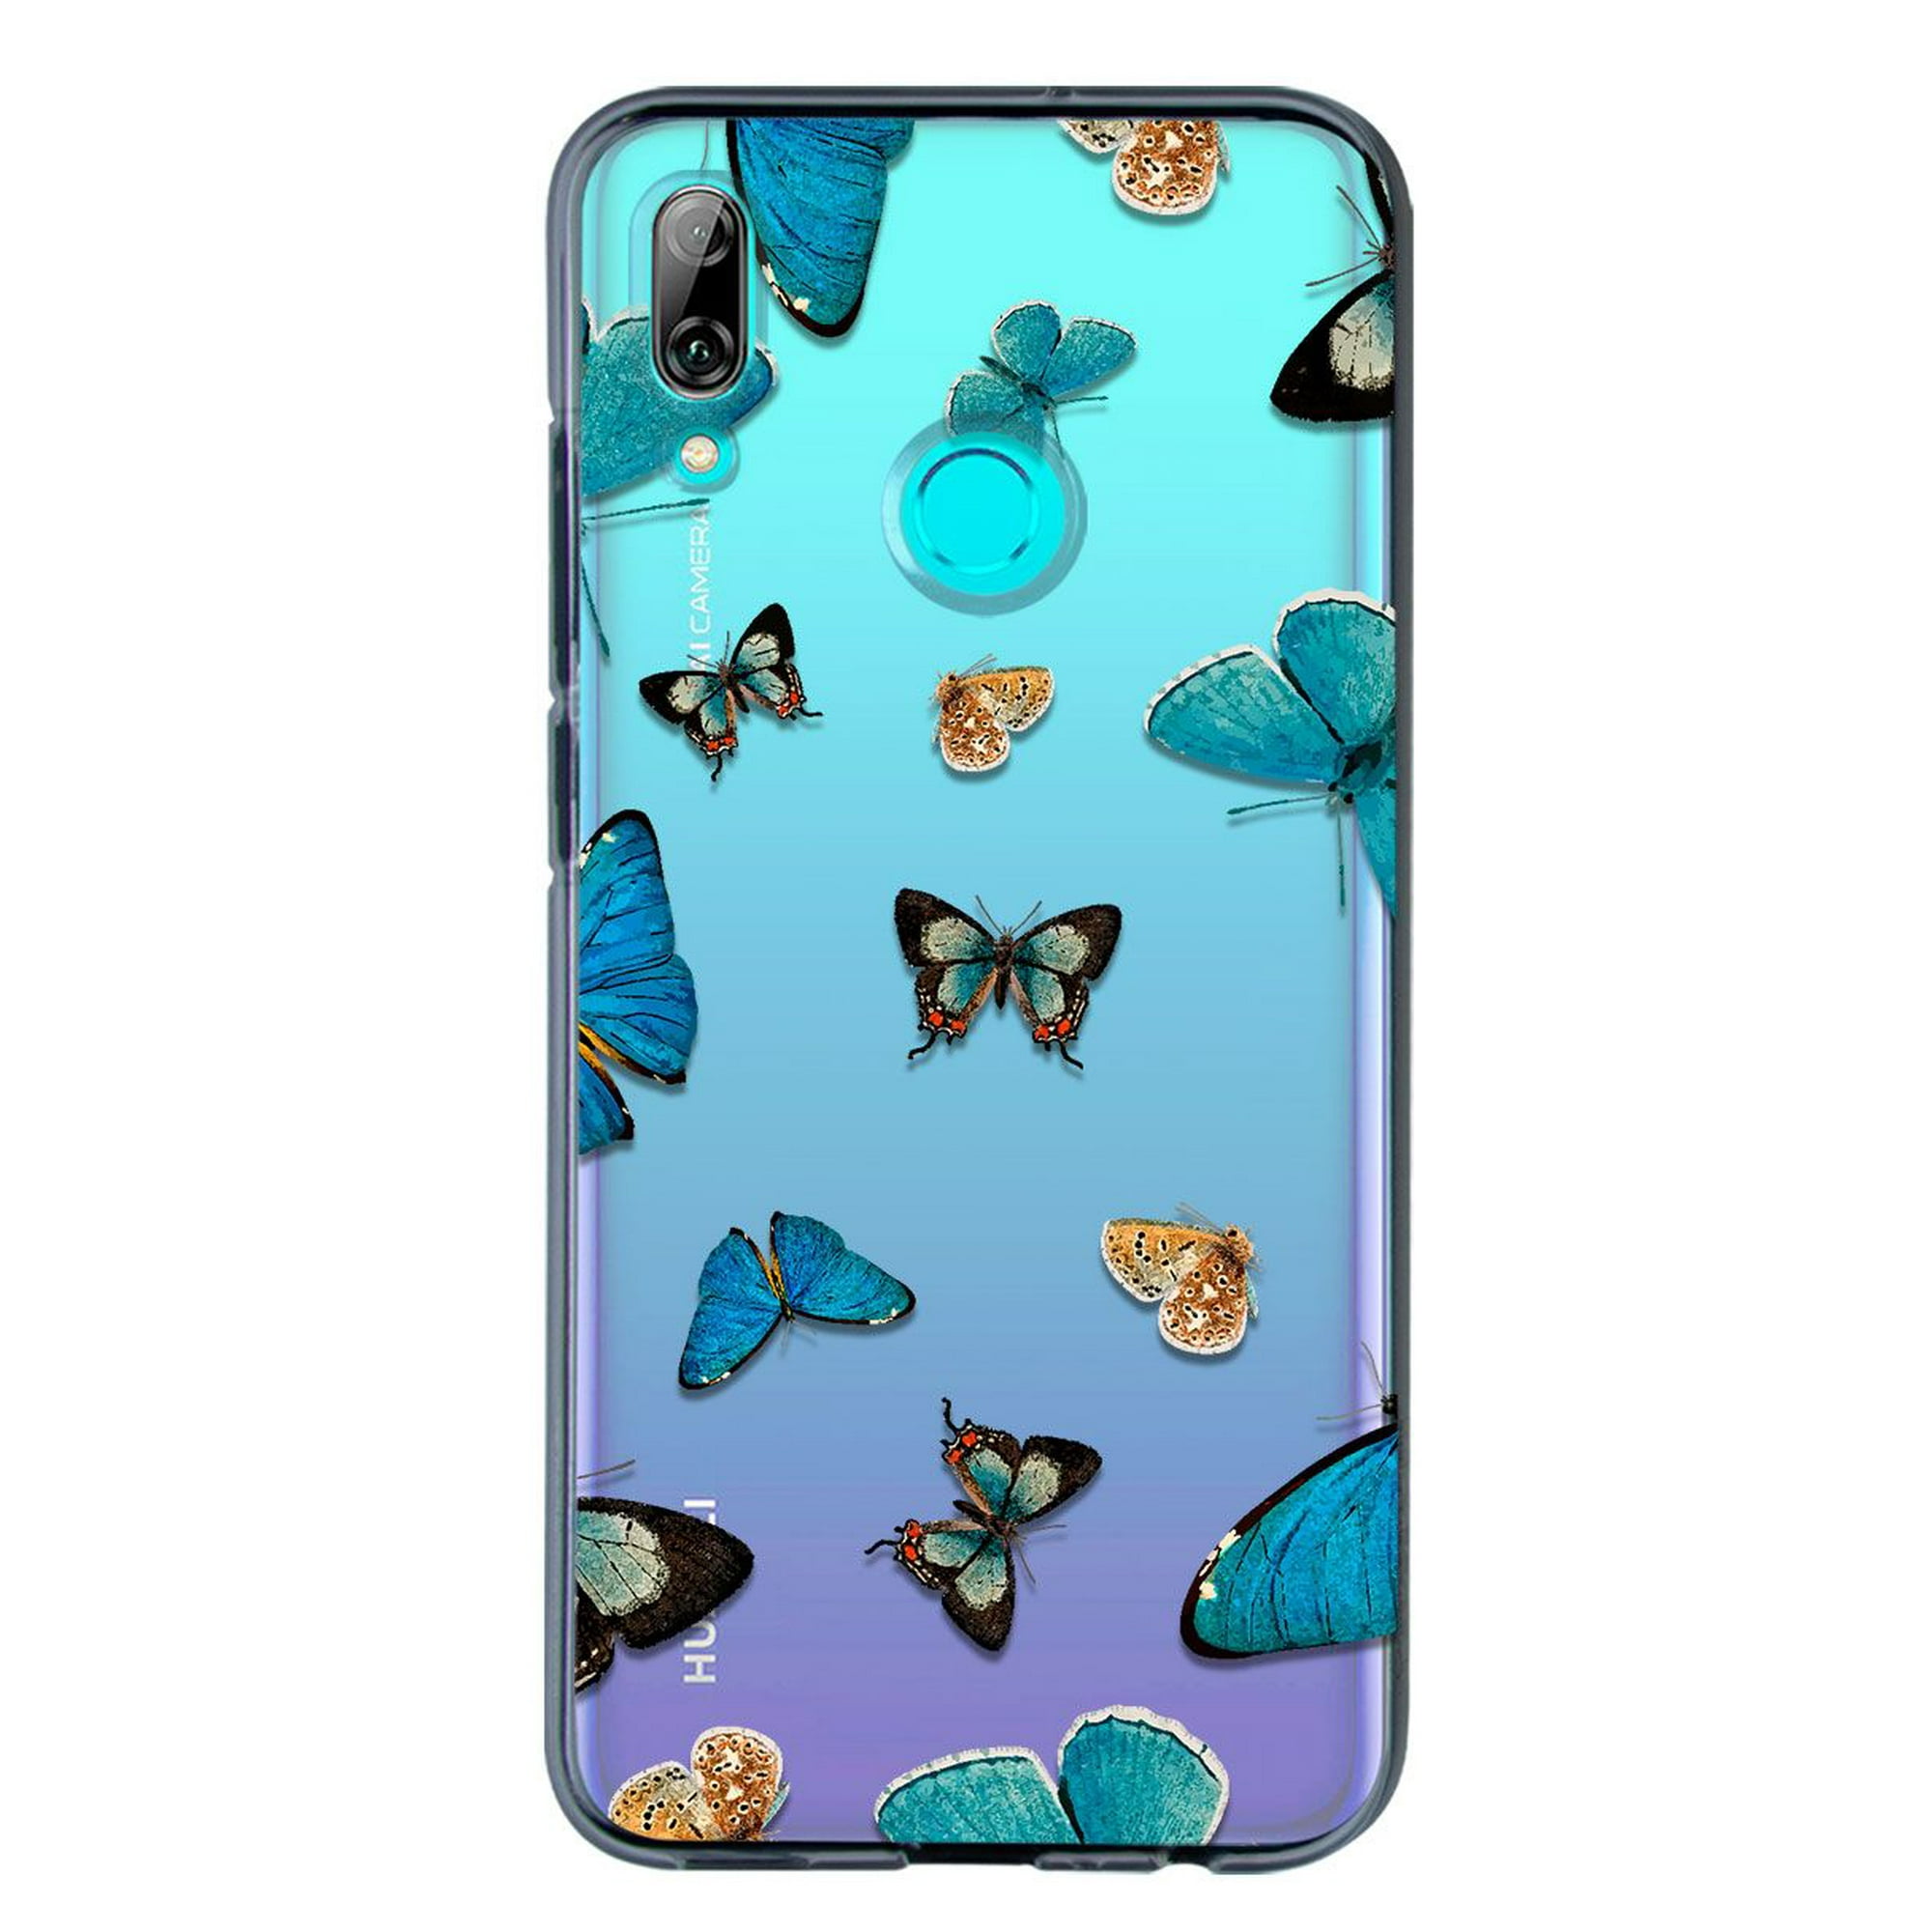 Funda para huawei p smart 2019 mariposas azules, uso rudo, instacase protector para huawei p smart 2019 antigolpes, case mariposas azules